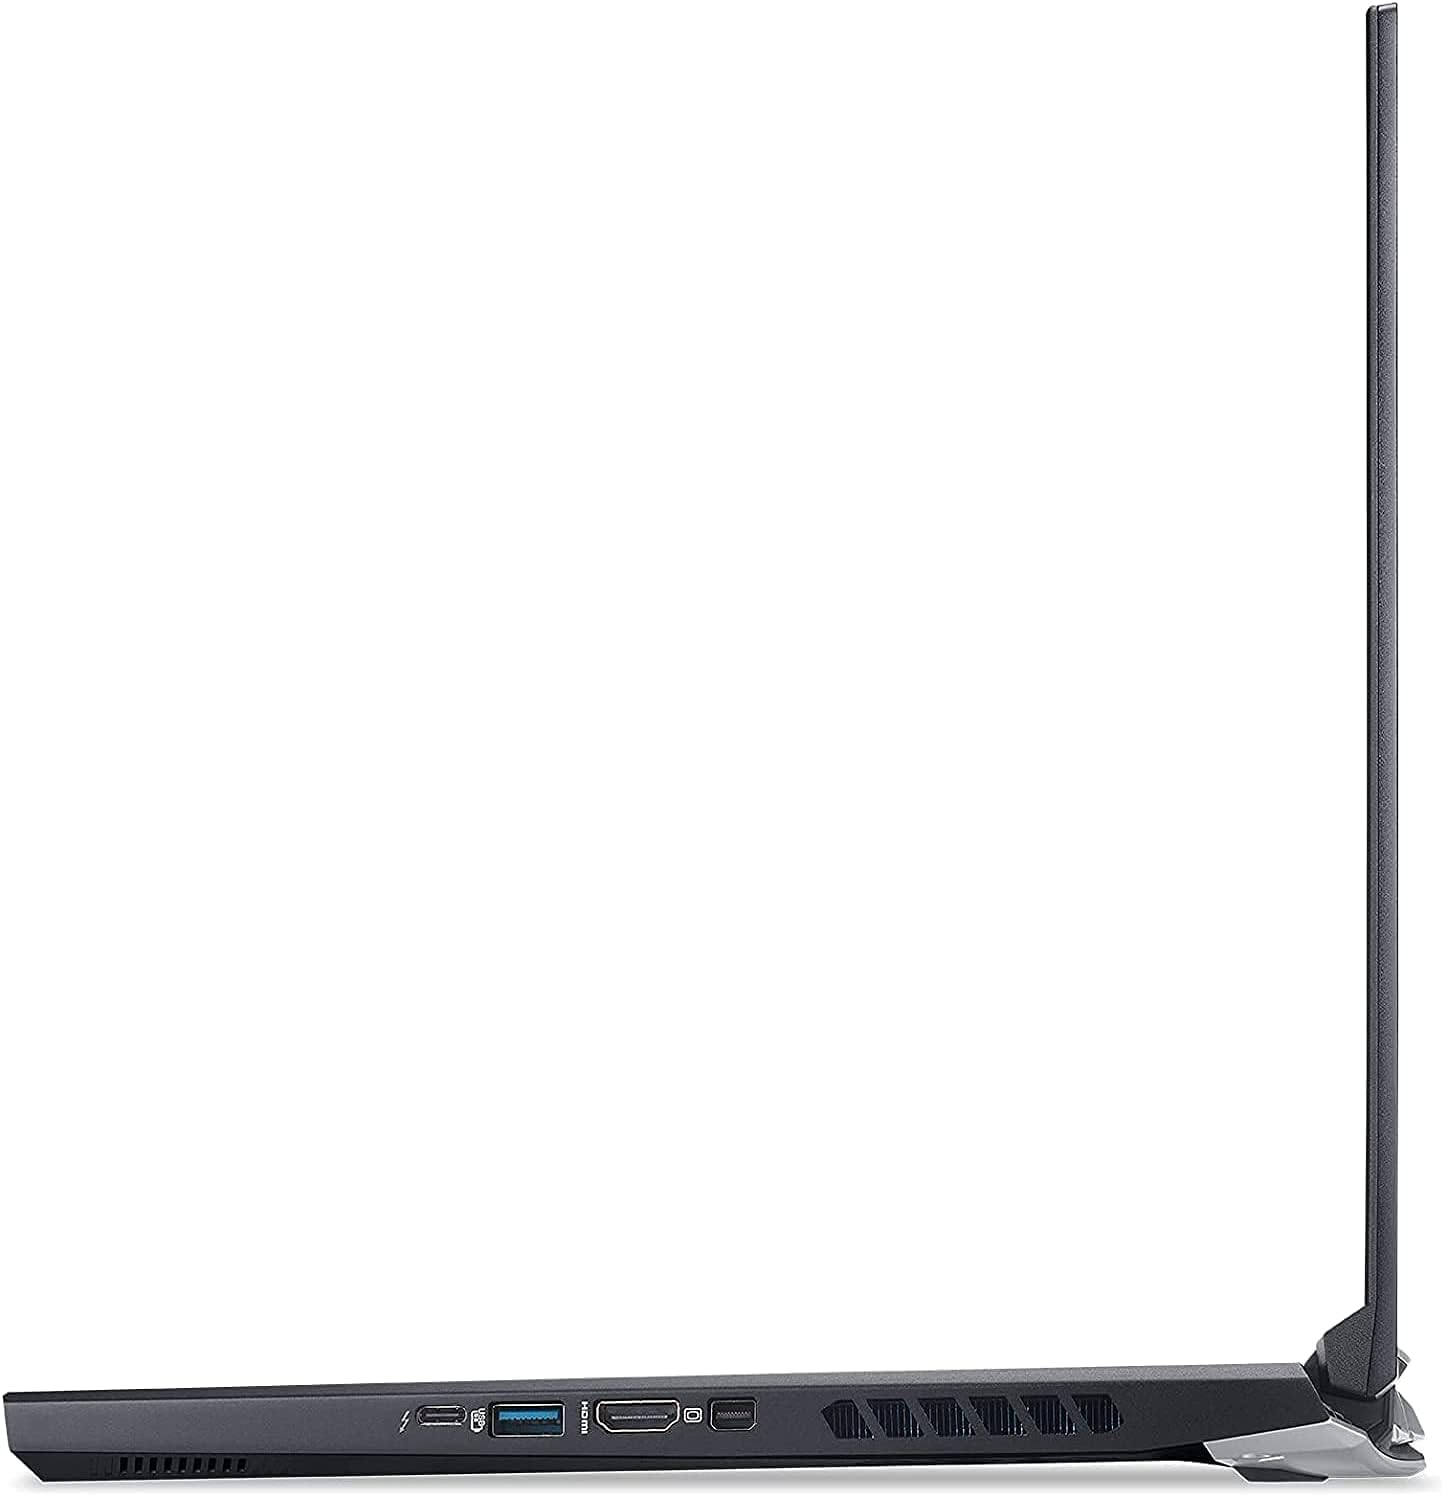 Black Acer Predator Helios 300 Laptop - 15.6 Screen, 64GB RAM, Windows 10, Dedicated Graphics 0193199353610